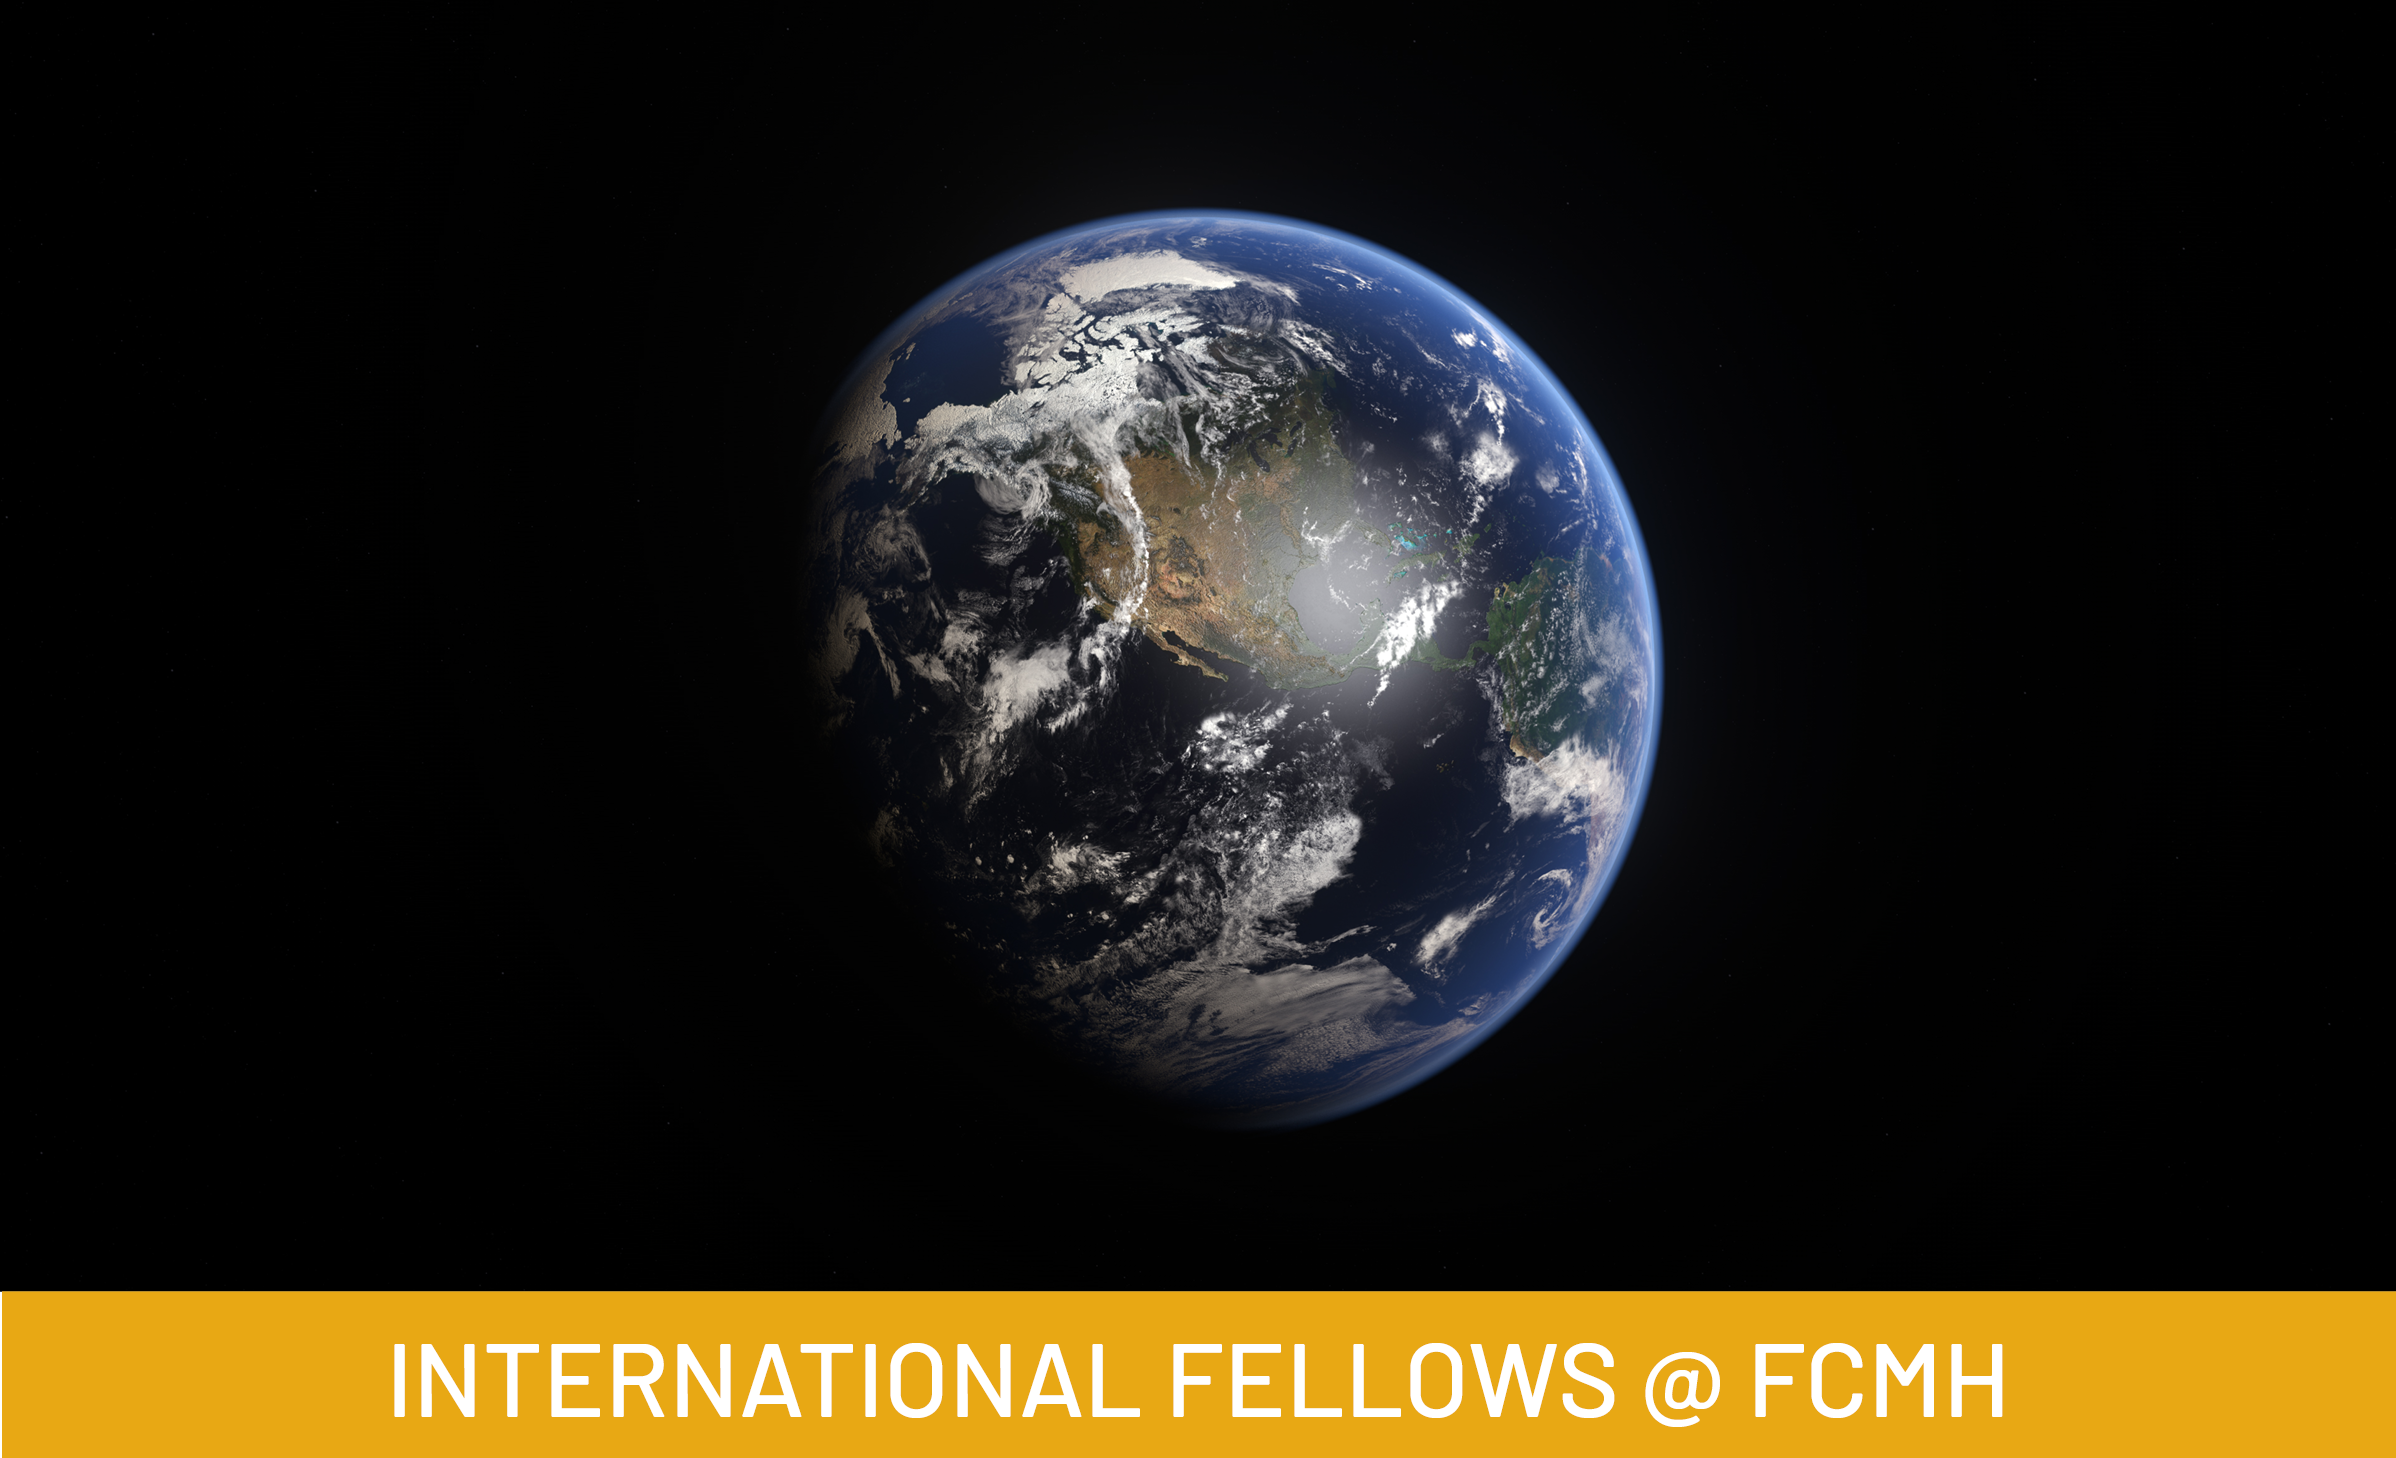 Banner: 
International Fellows @ FCMH